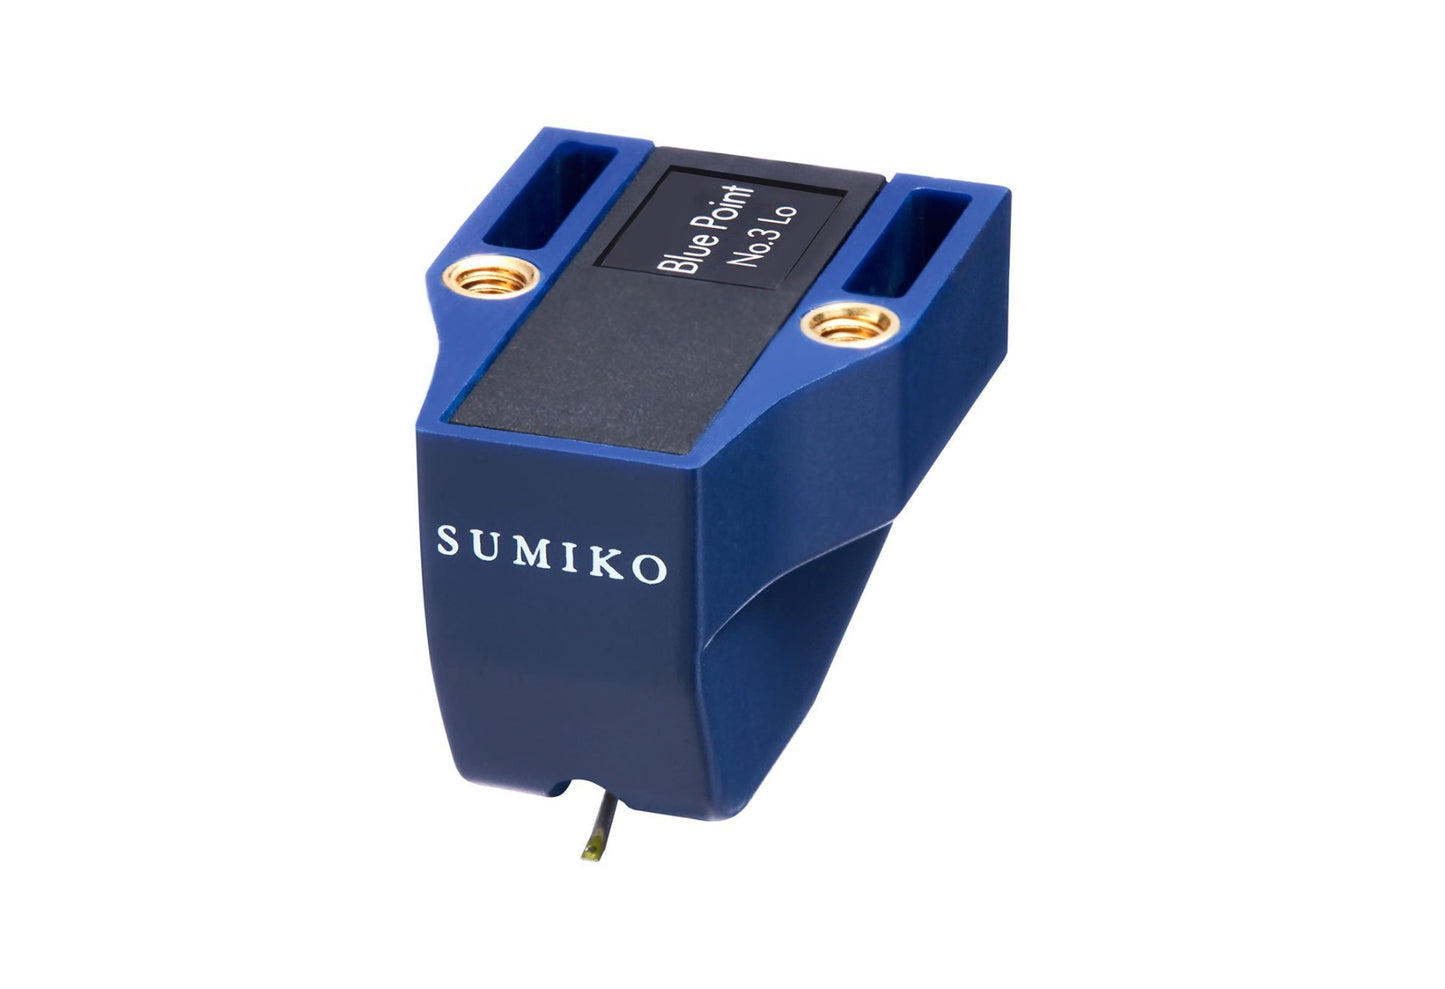 Sumiko Blue Point No. 3 Low MC Phono Cartridge